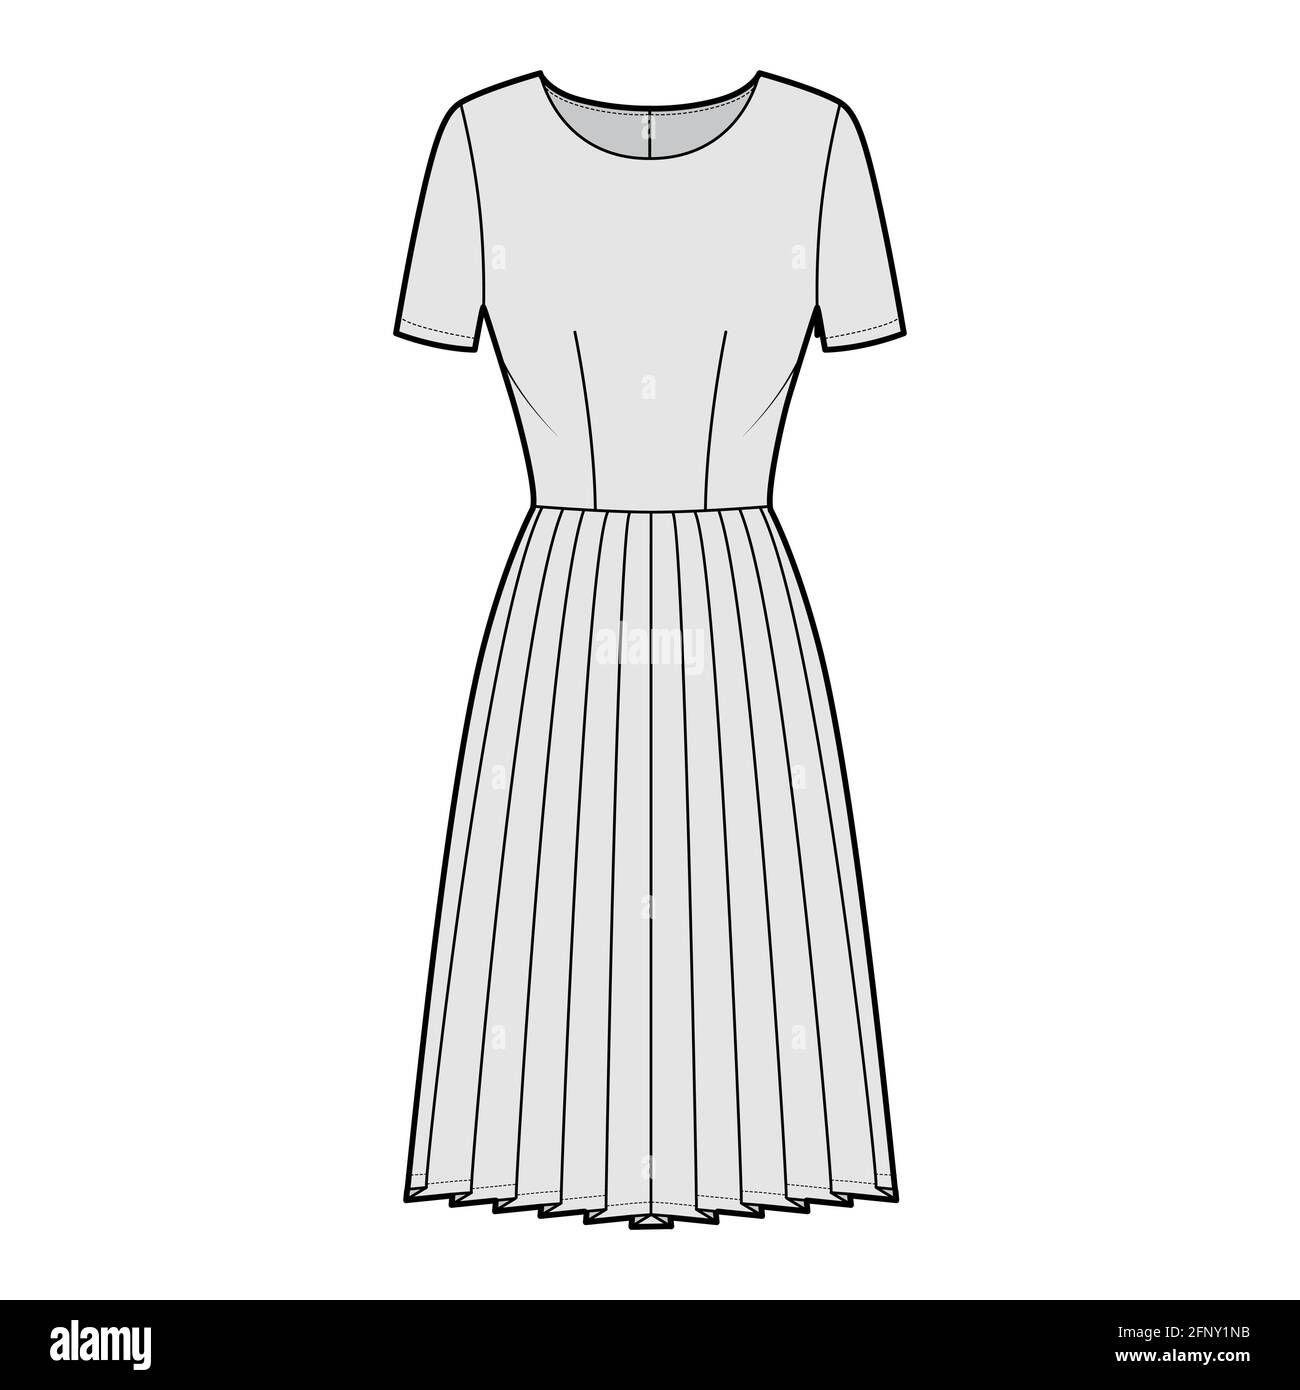 Short skirt uniform Stock Vector Images - Alamy